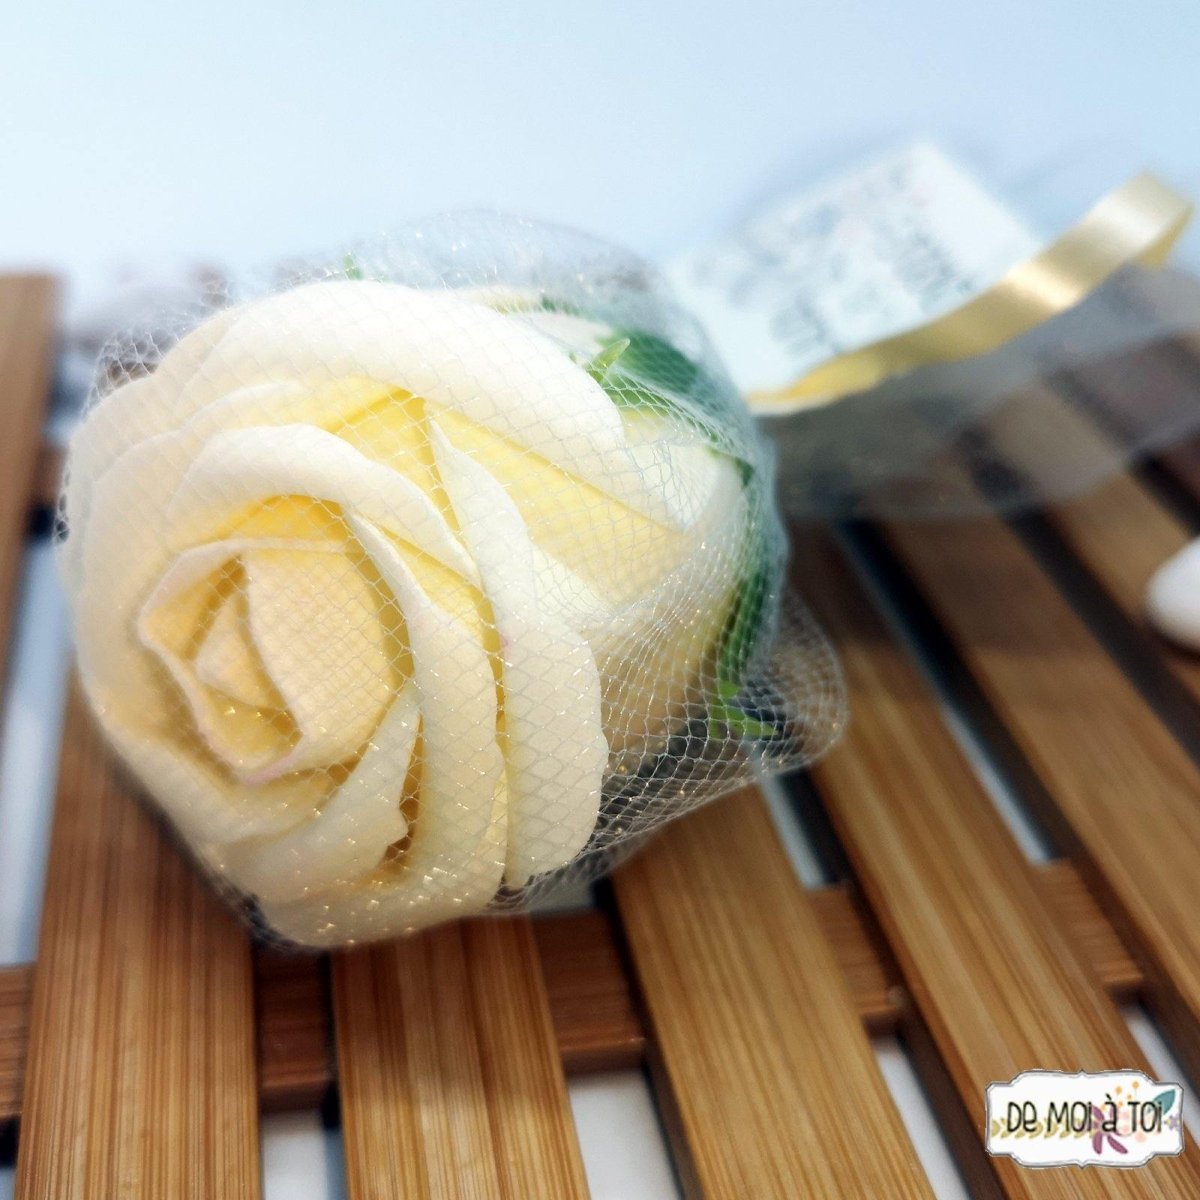 Rosa eterna de jabón - Envuelta en tul - Regalo original personalizado - DE MOI À TOI